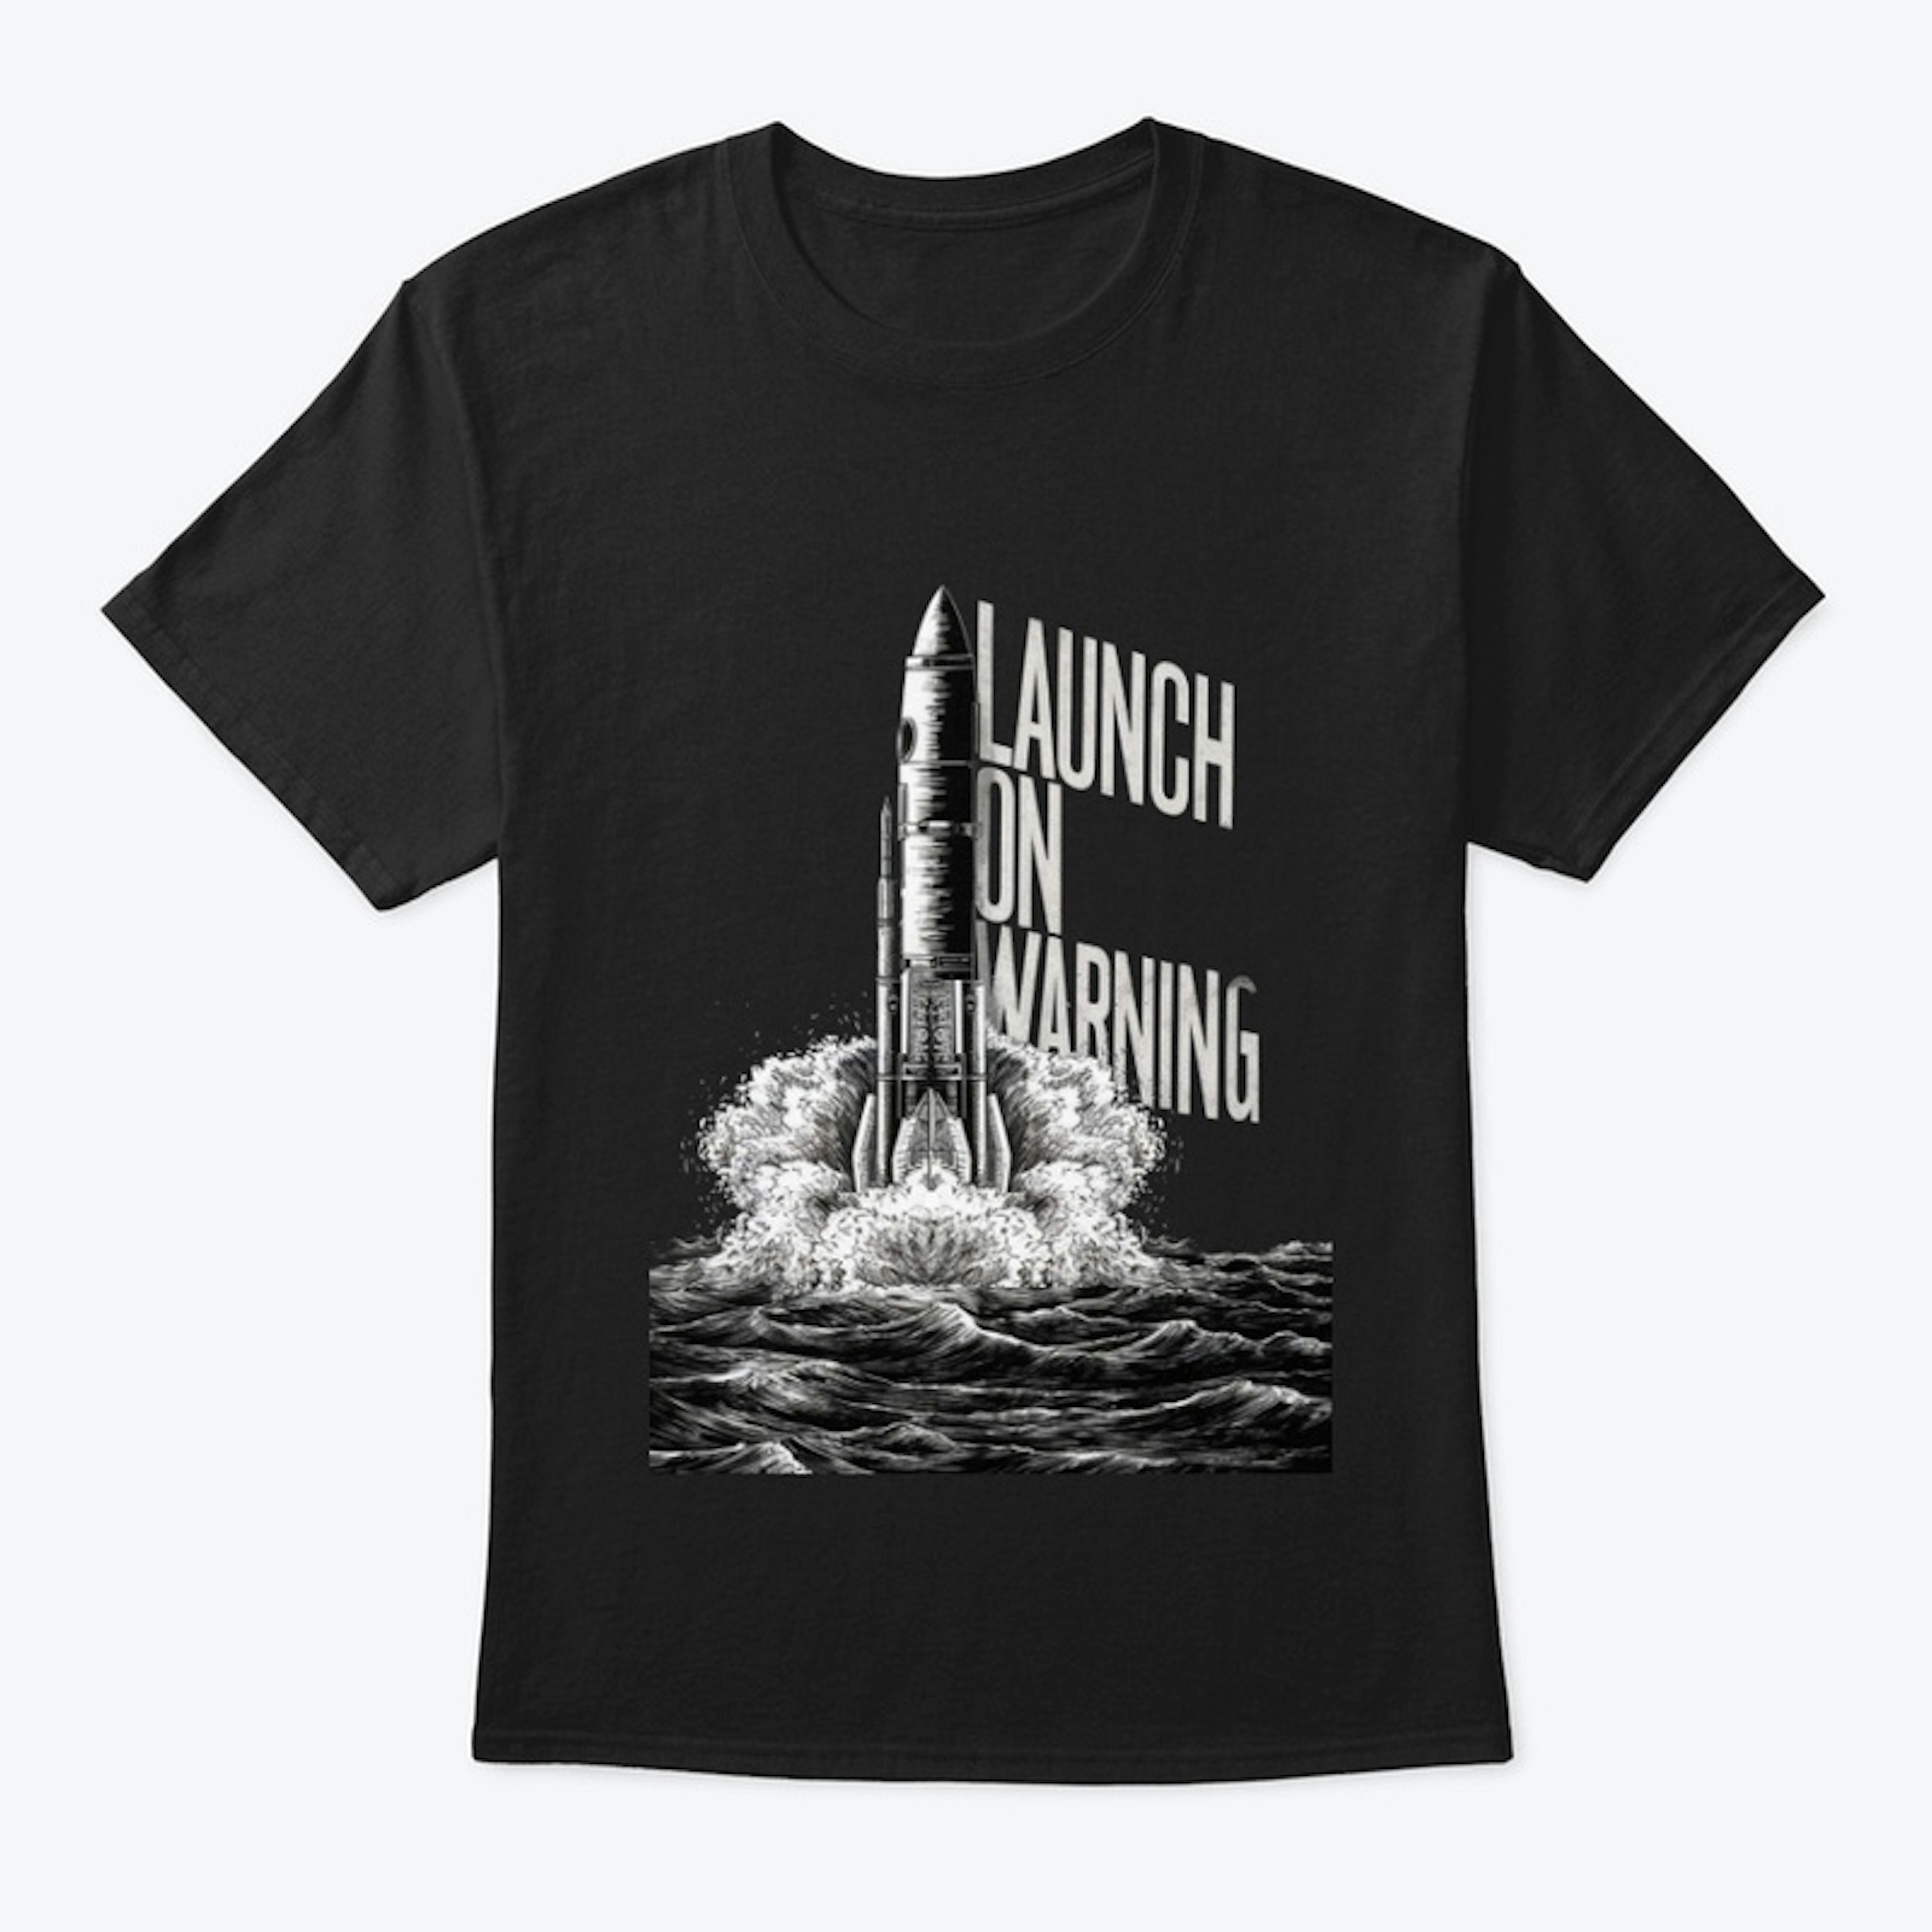 Launch on Warning